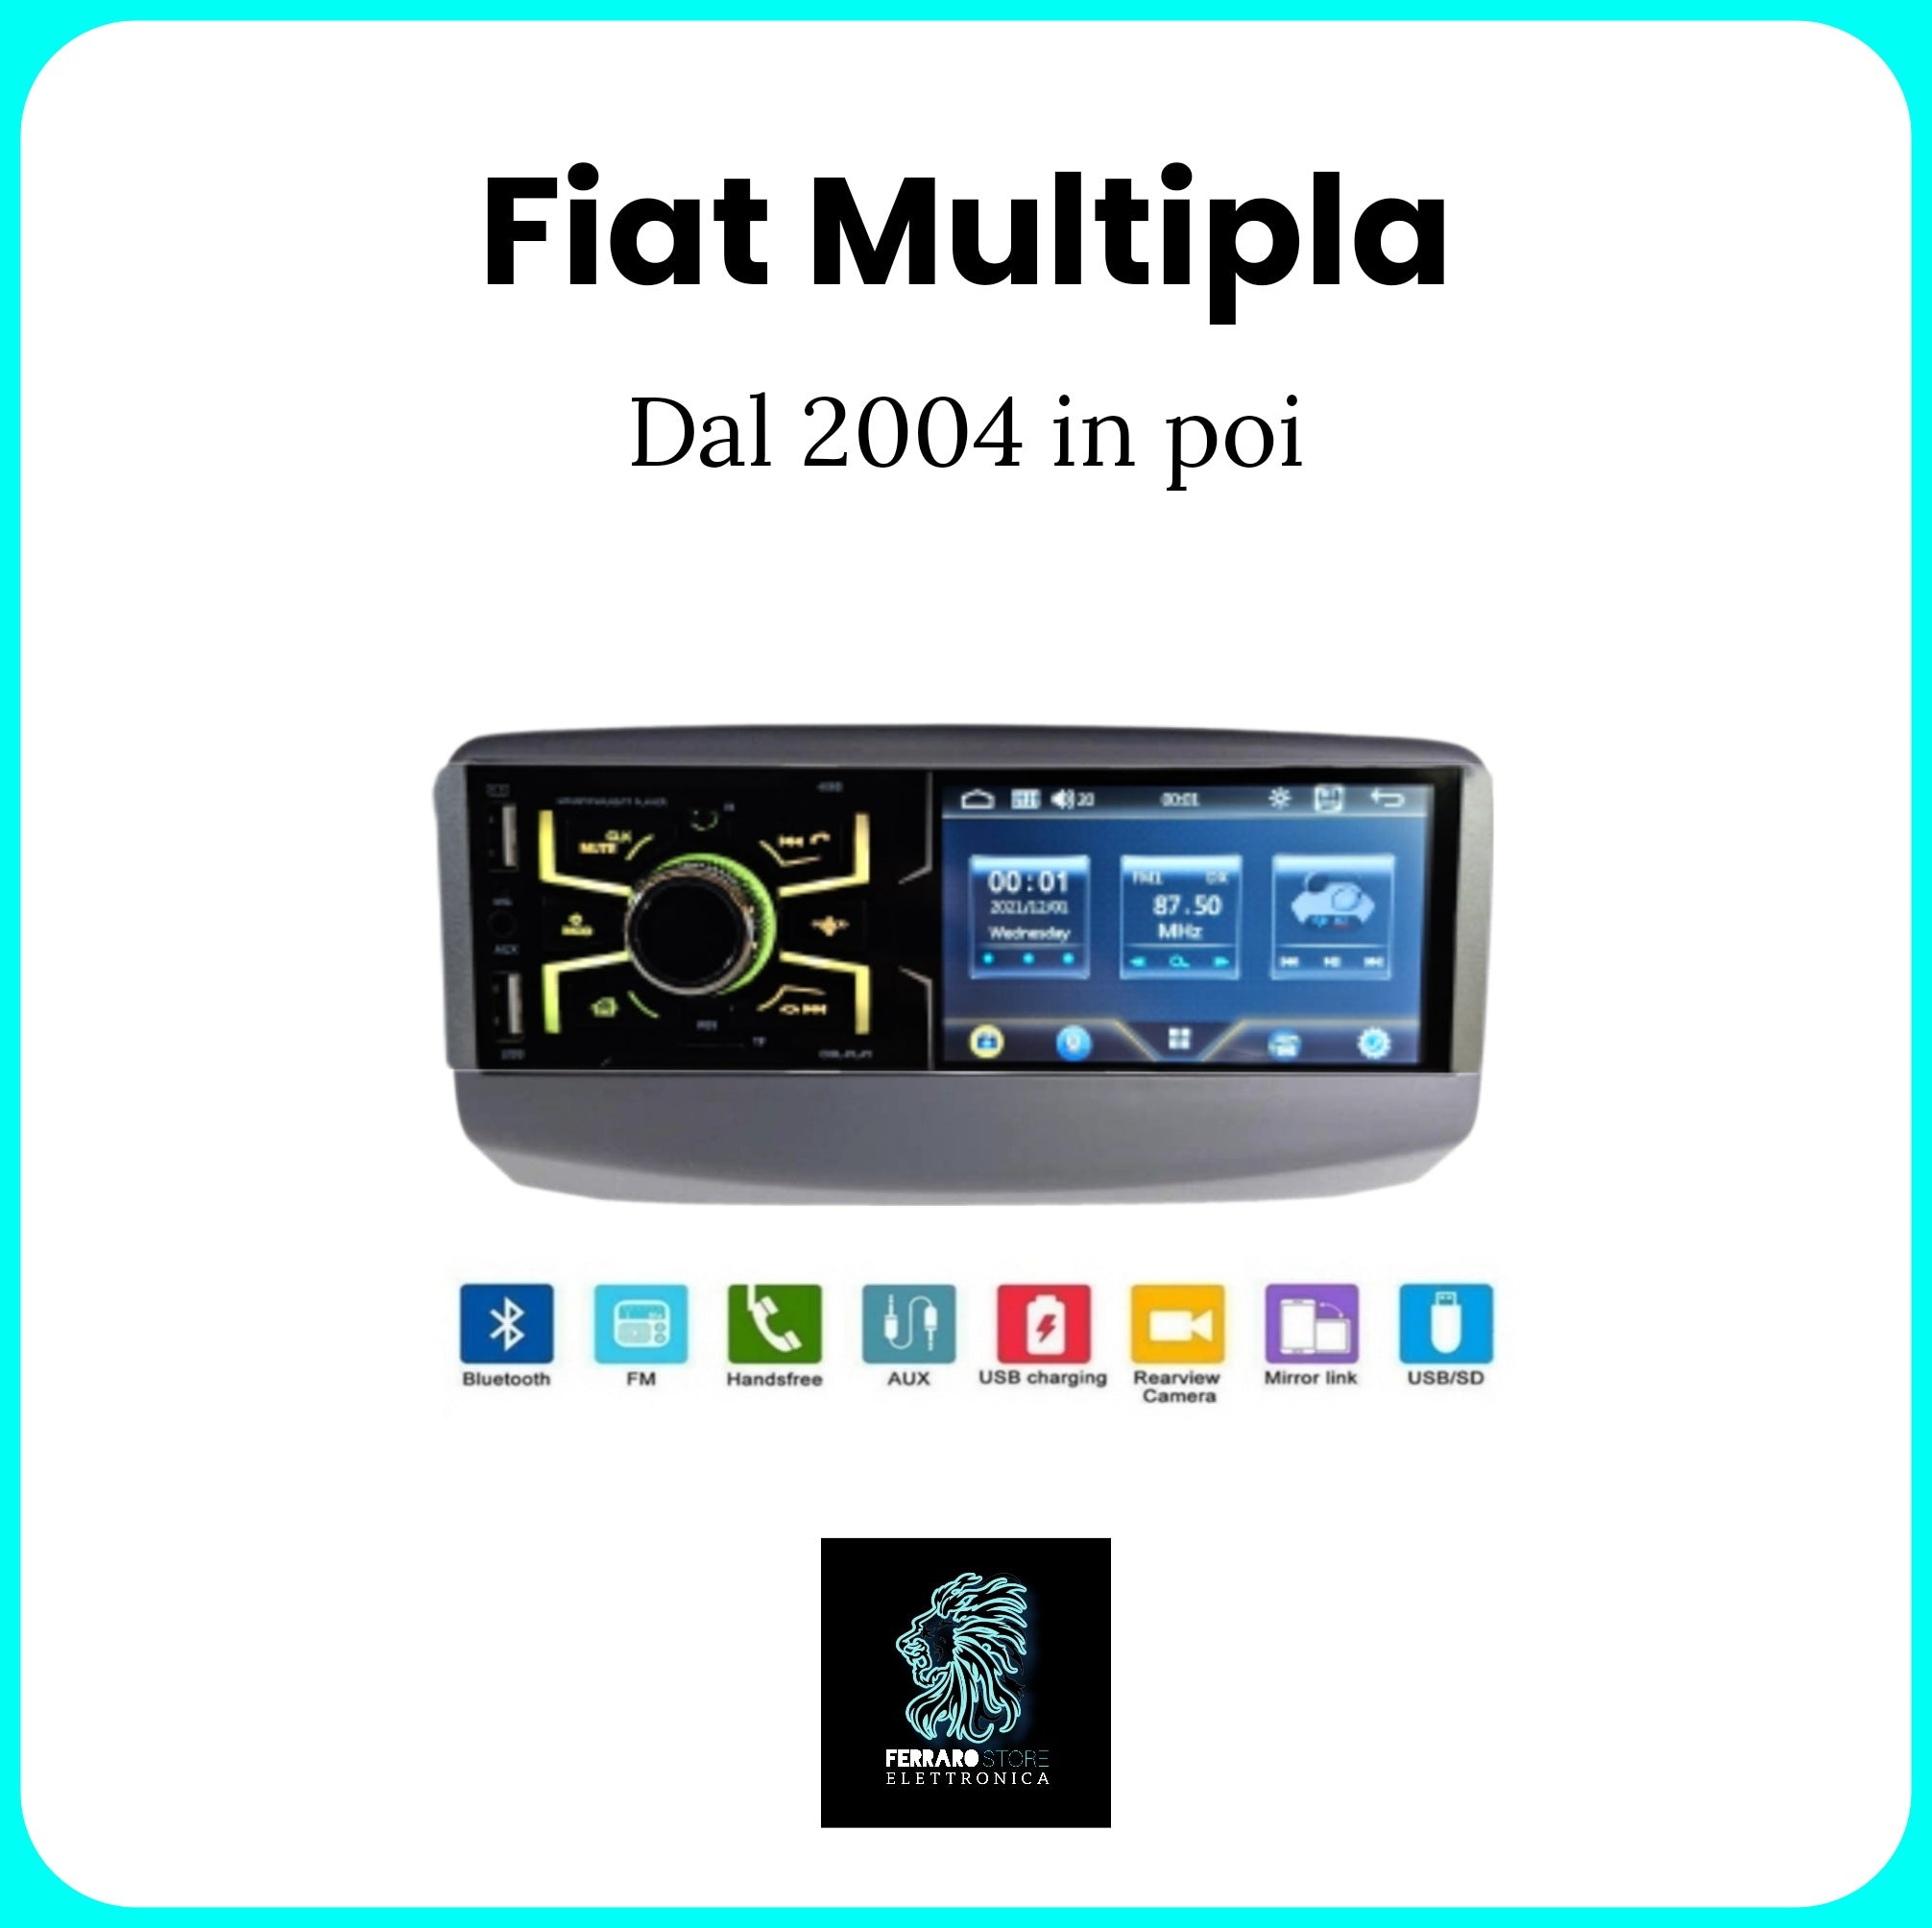 Autoradio per Fiat MULTIPLA - 1Din 4"Pollici, Bluetooth, Radio, AUX, USB.